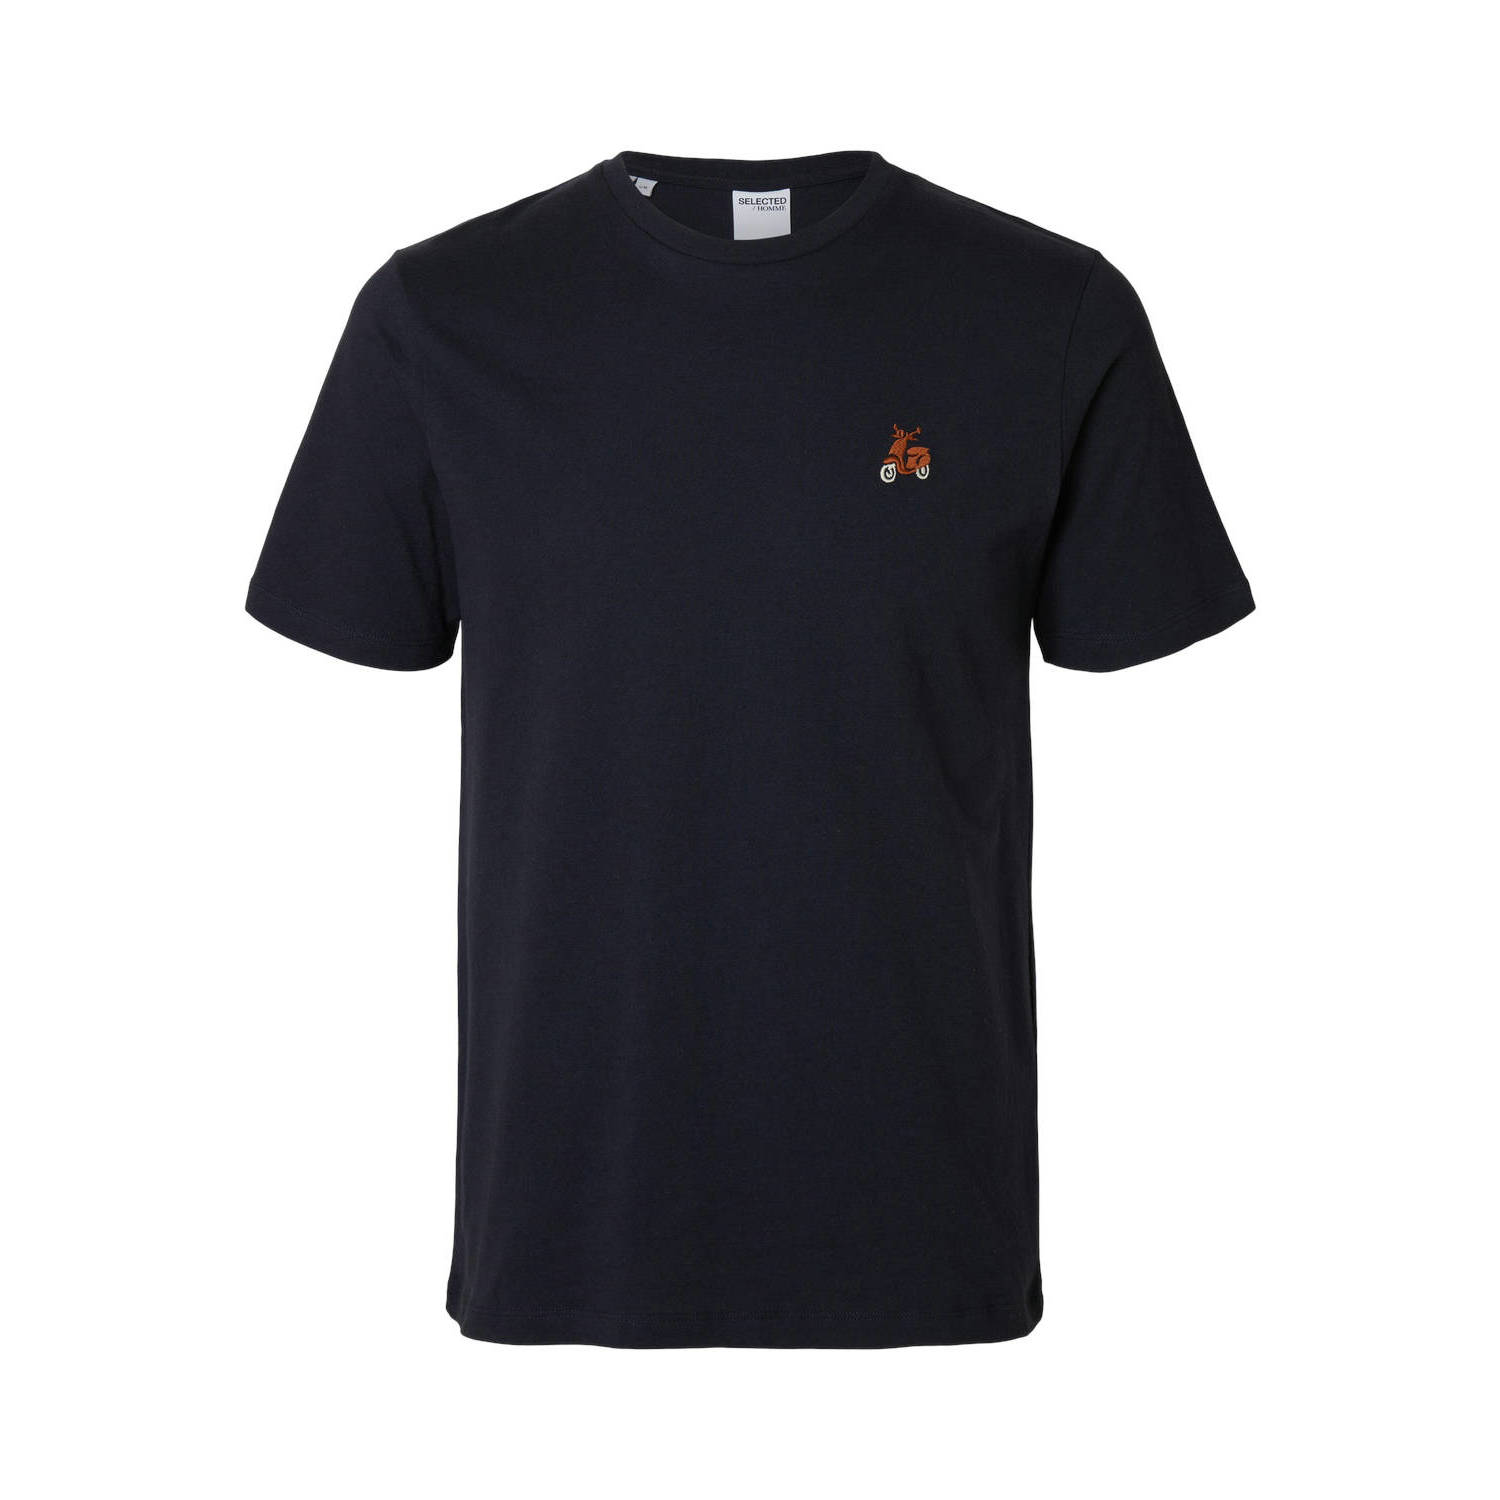 SELECTED HOMME T-shirt met printopdruk dark navydetail:emb scooter